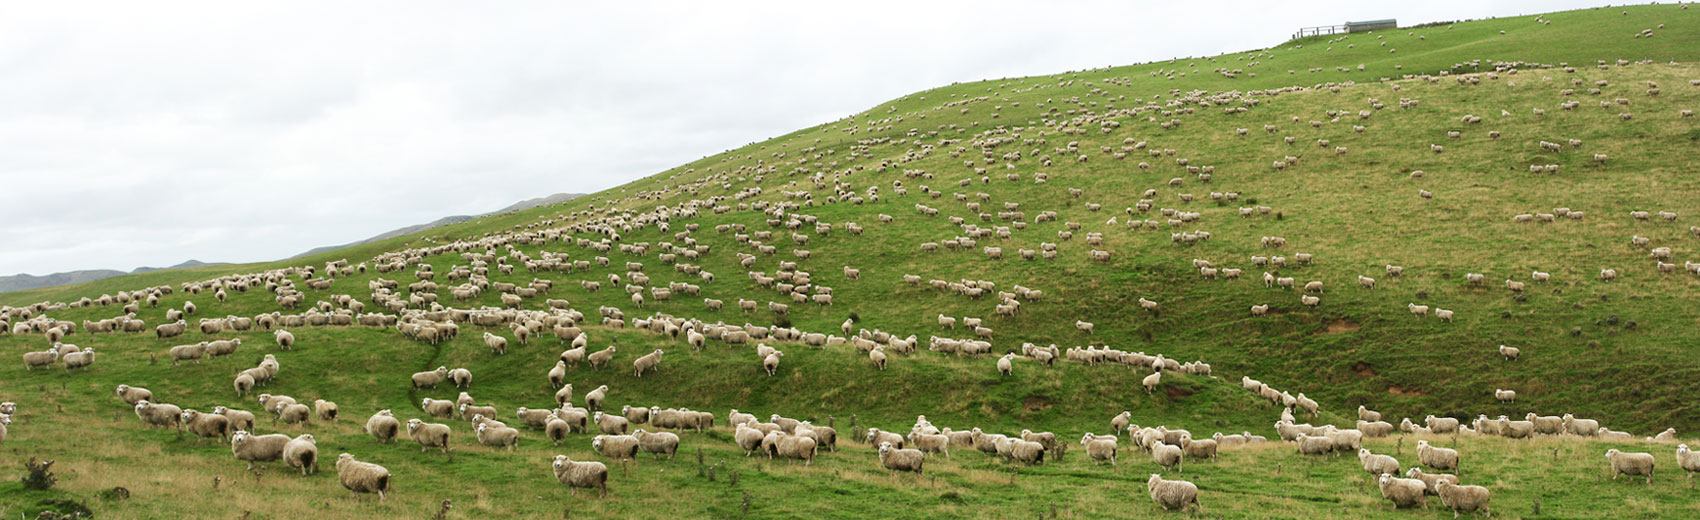 New Zealand sheep farming